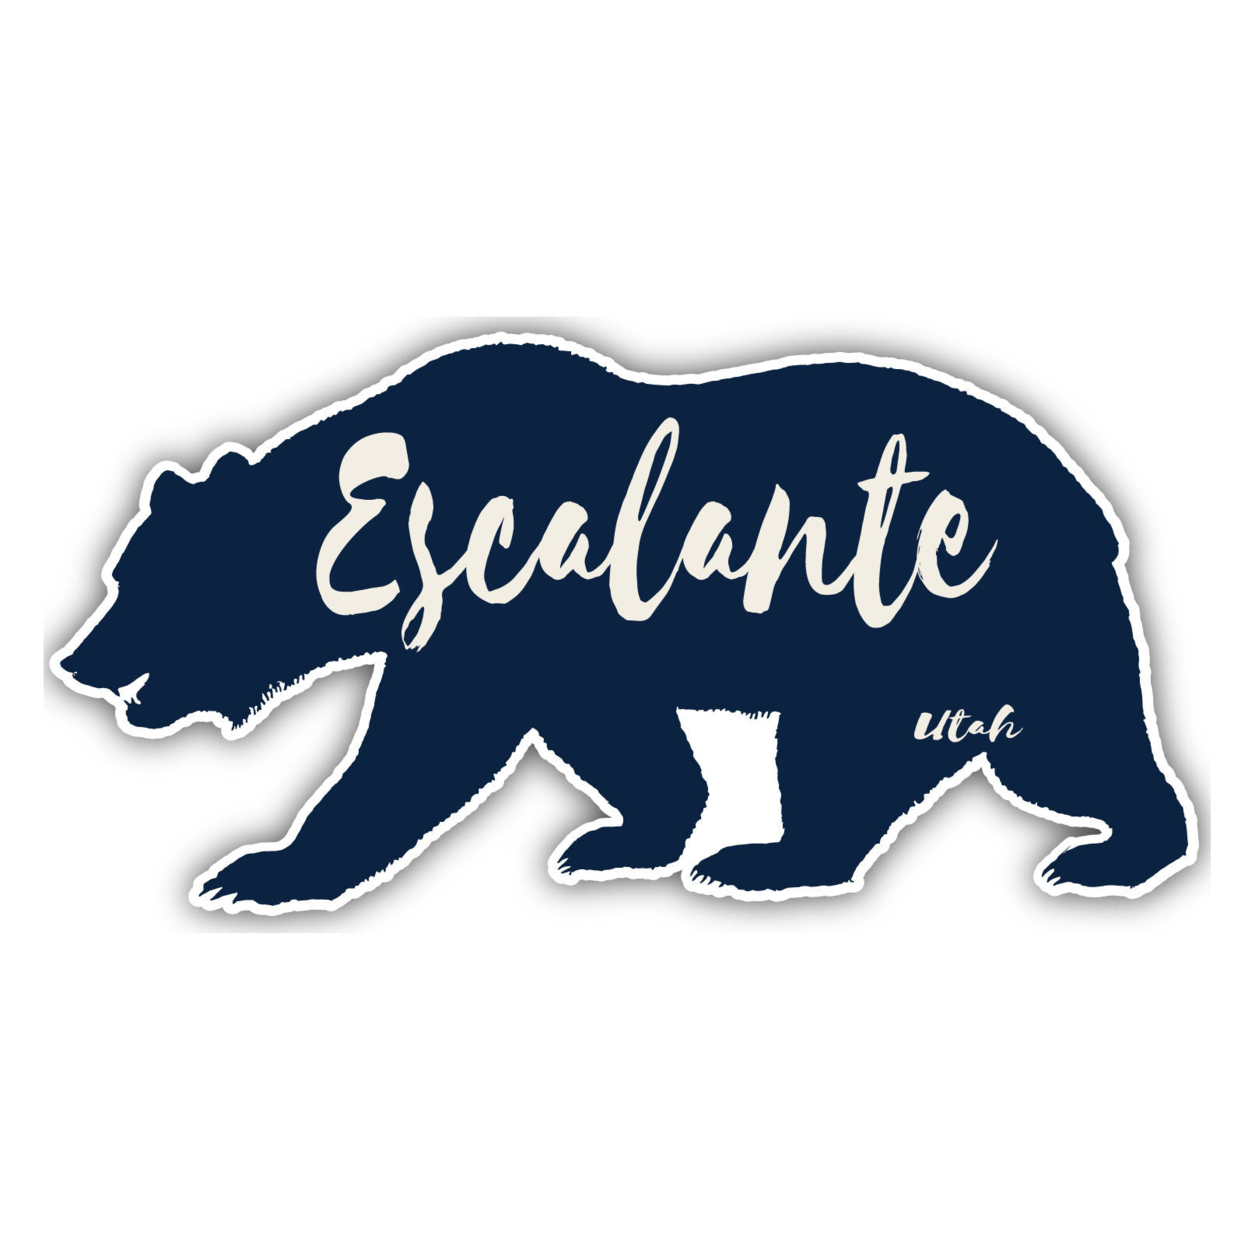 Escalante Utah Souvenir Decorative Stickers (Choose Theme And Size) - 4-Pack, 12-Inch, Bear